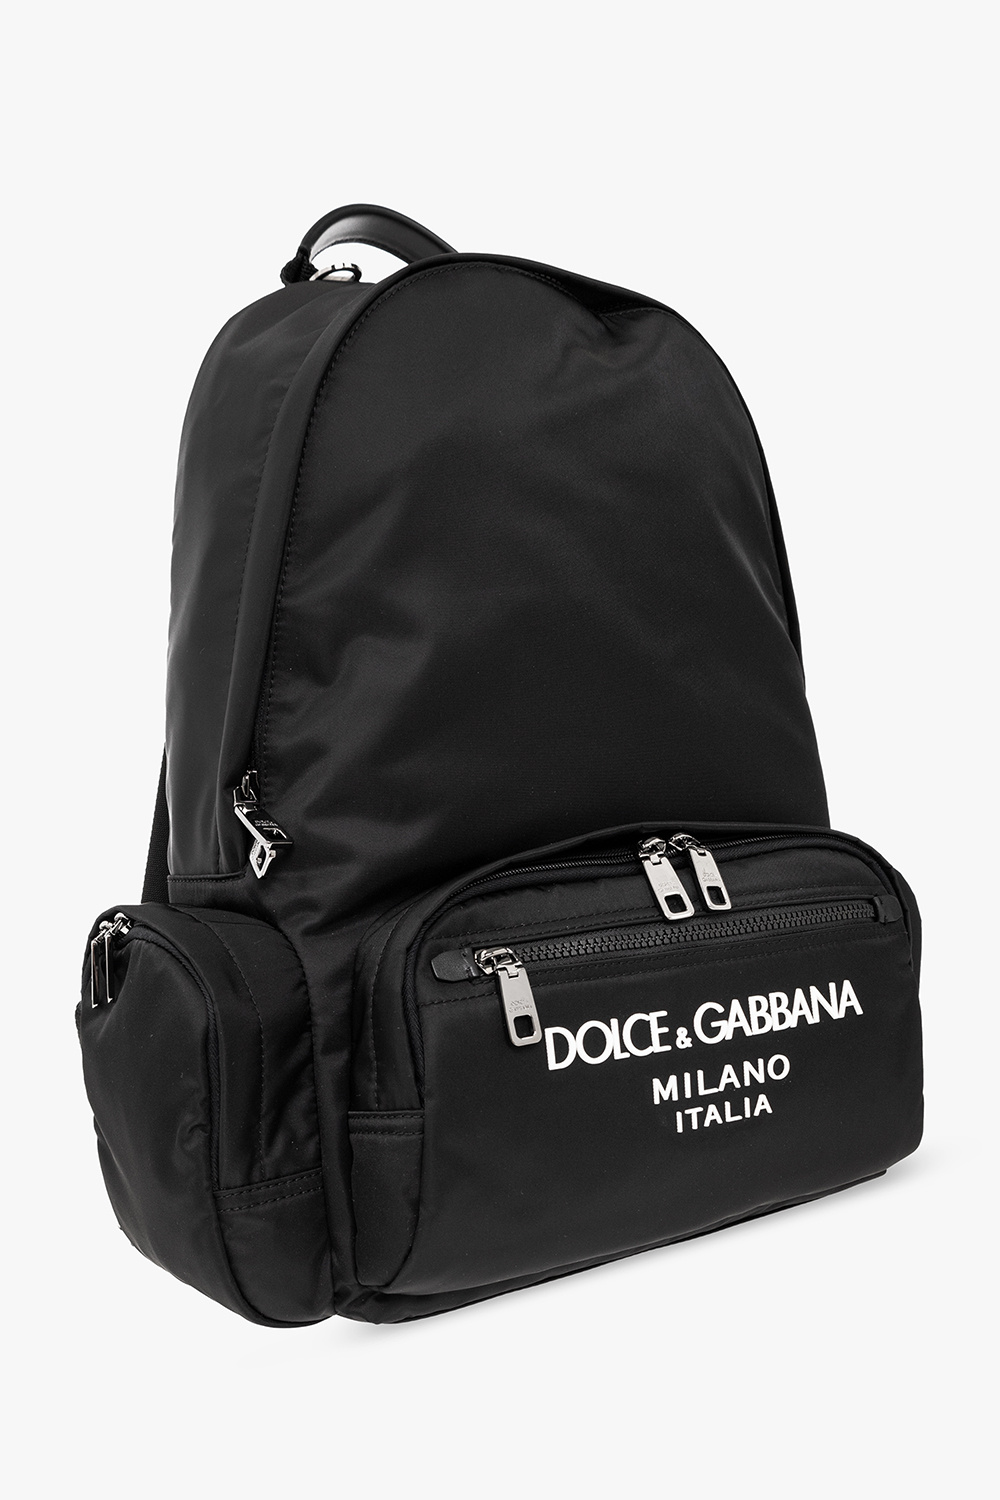 Dolce & Gabbana dolce gabbana patchwork print high waisted shorts item